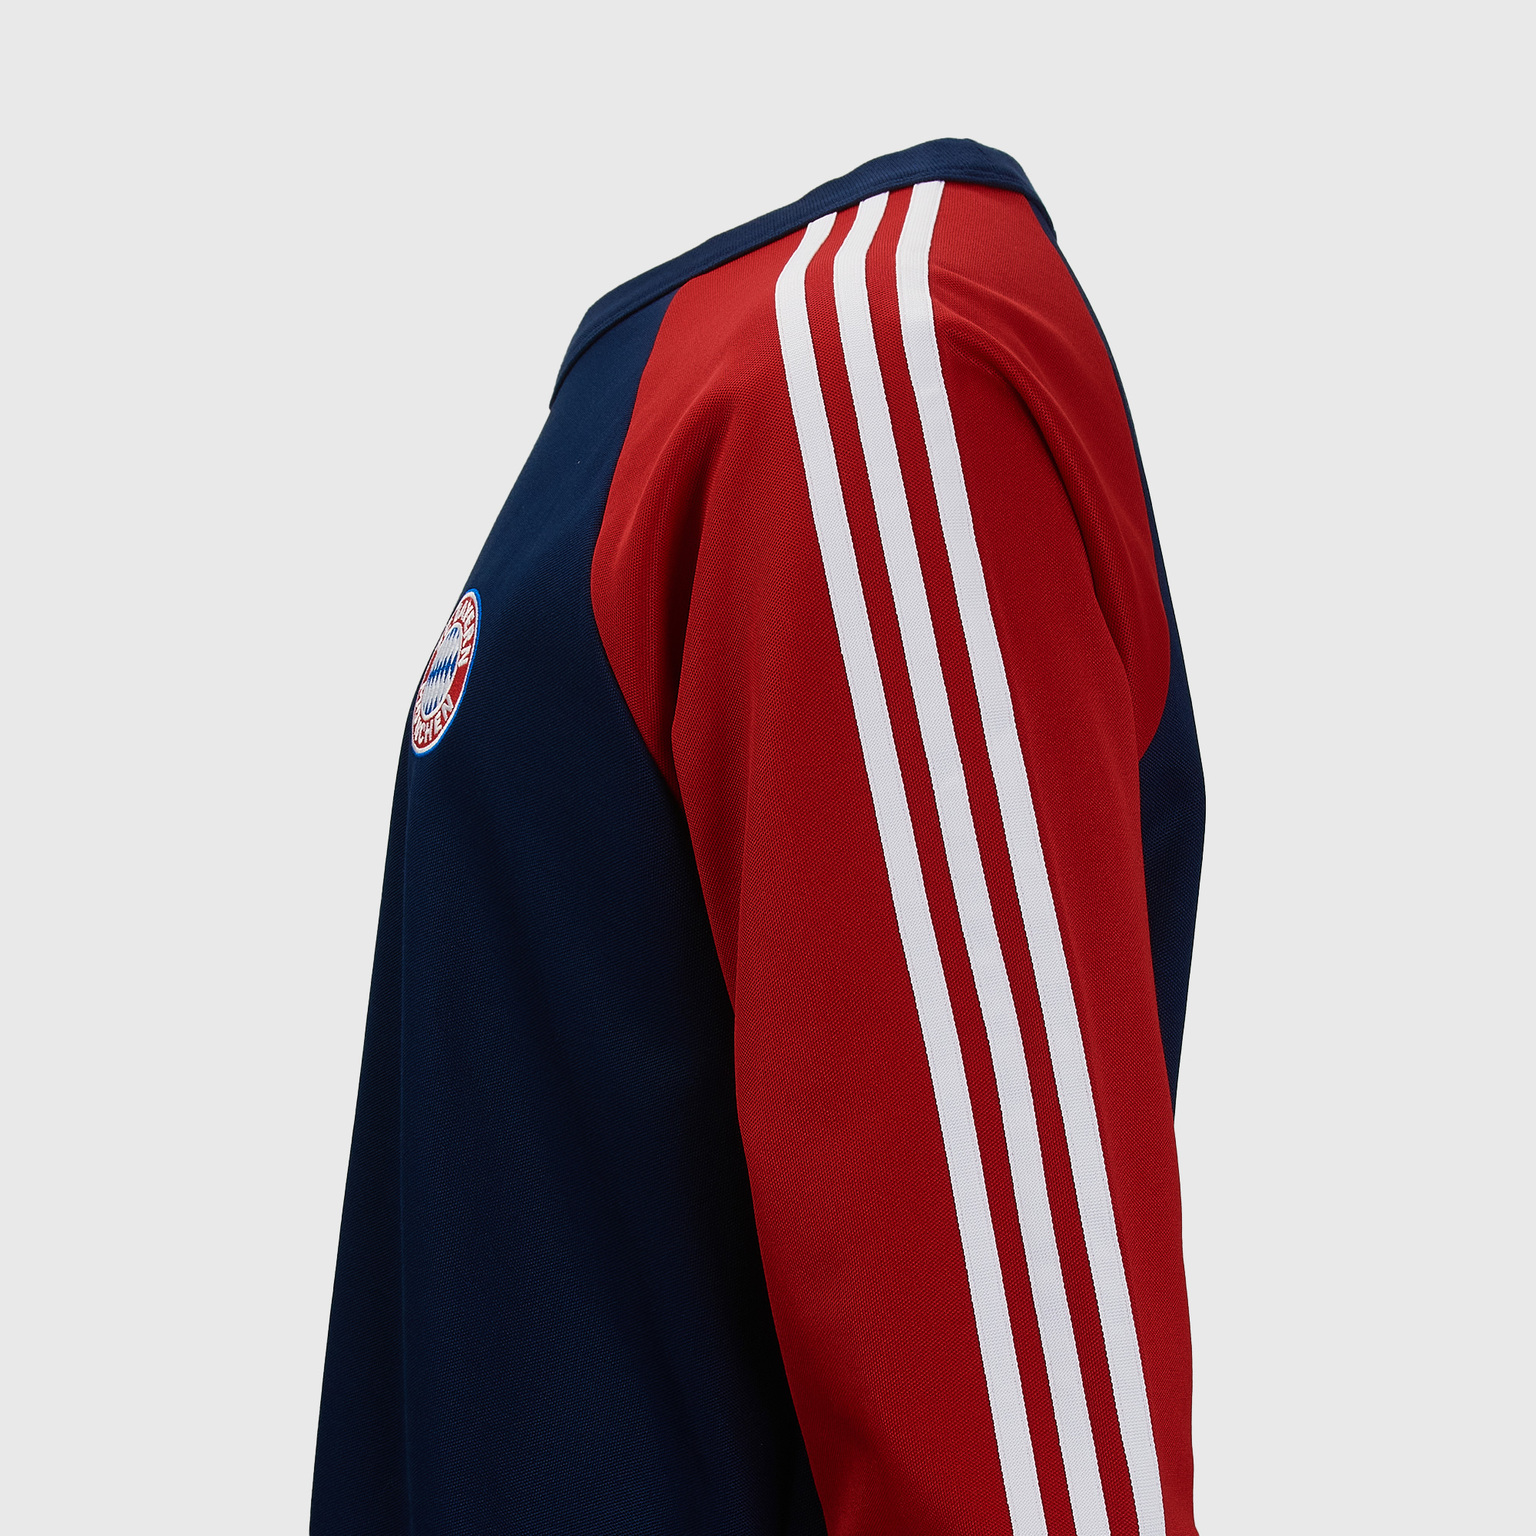 Свитшот Adidas Bayern H67171